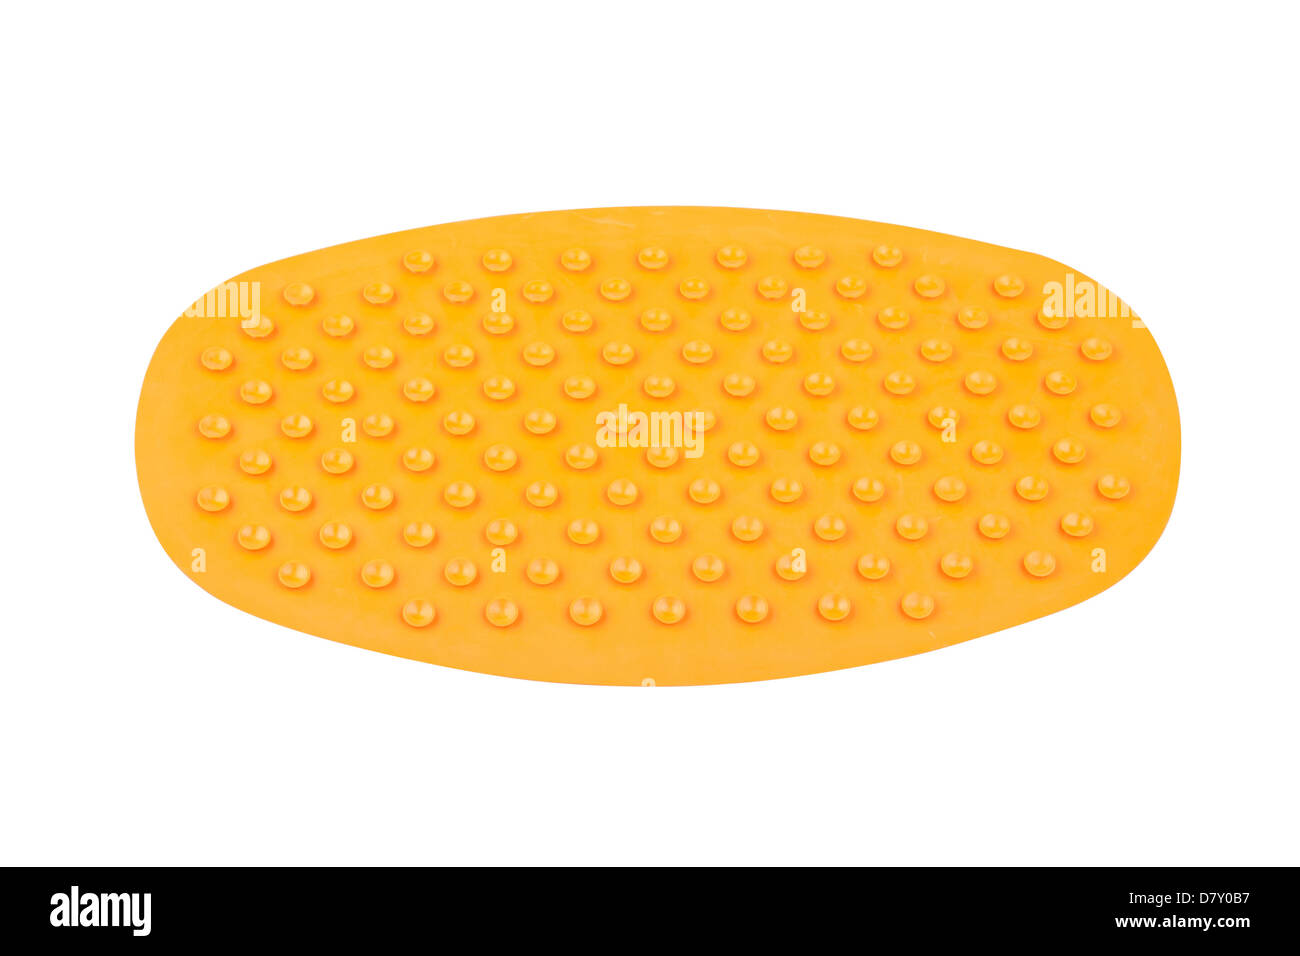 Anti slip rubber mat for bathroom or wet area Stock Photo